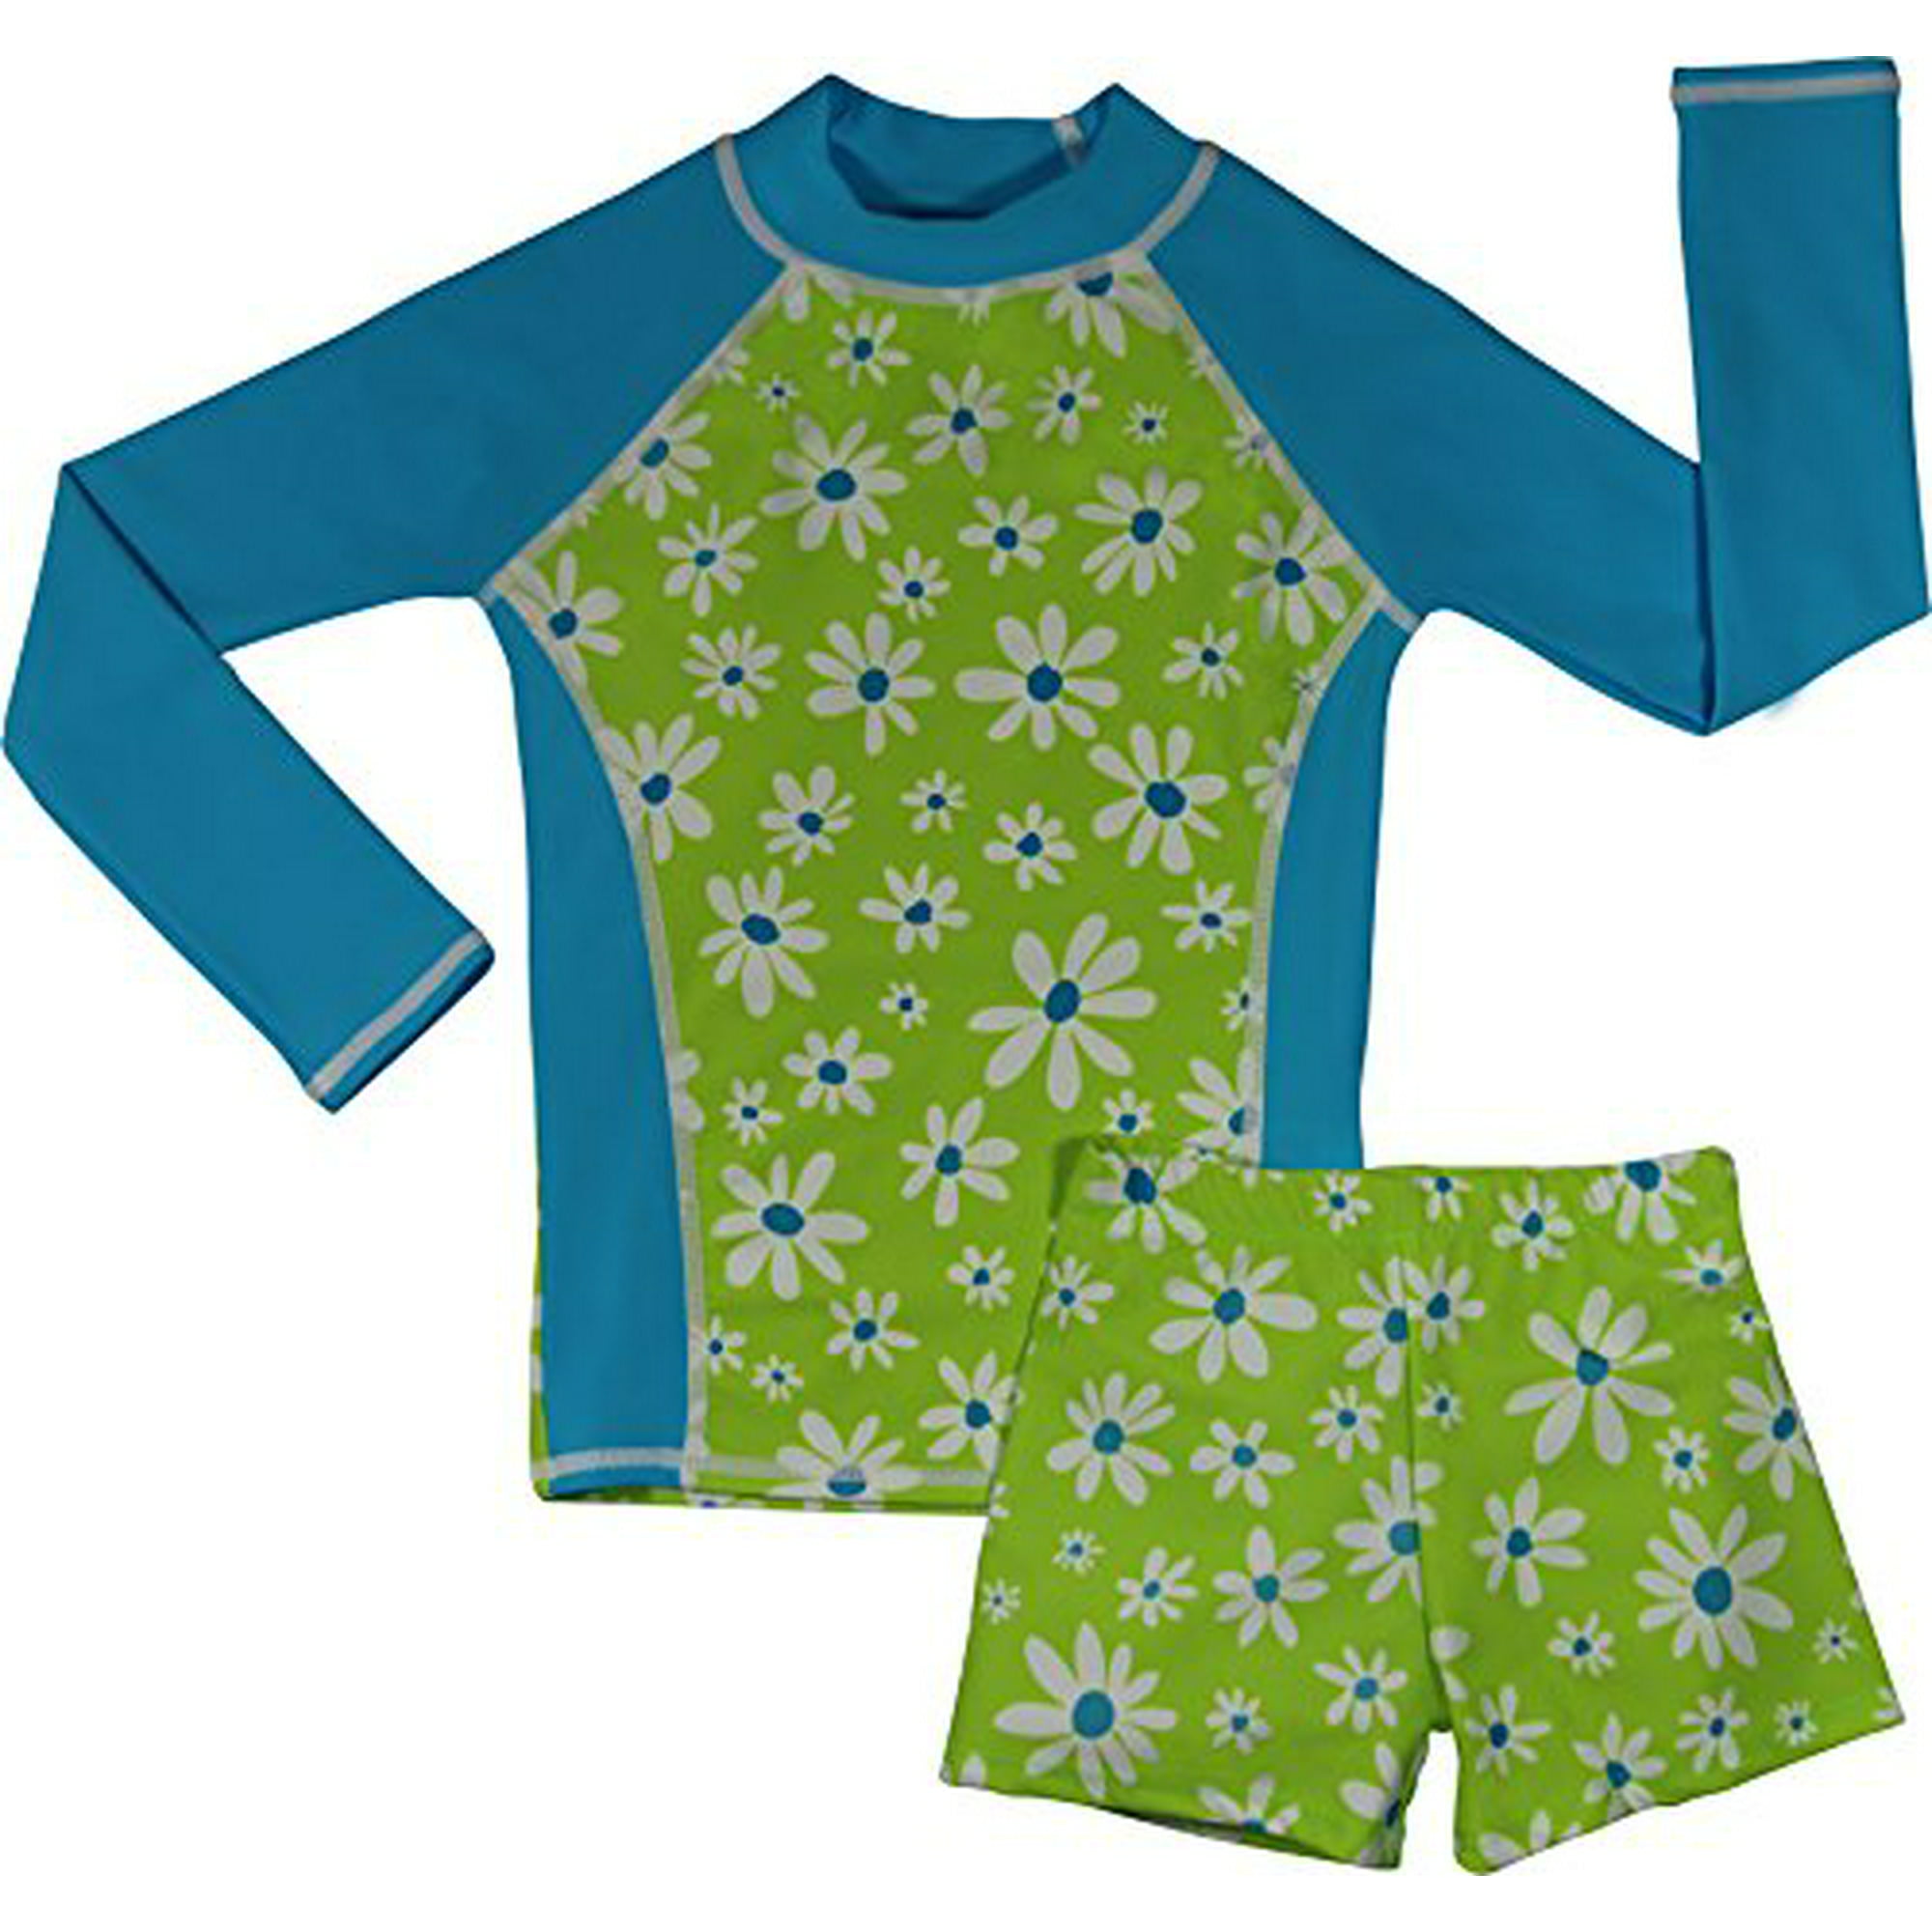 Baby 1 piece Swimsuit UPF 50+ grUVywear UV Sun Protective 